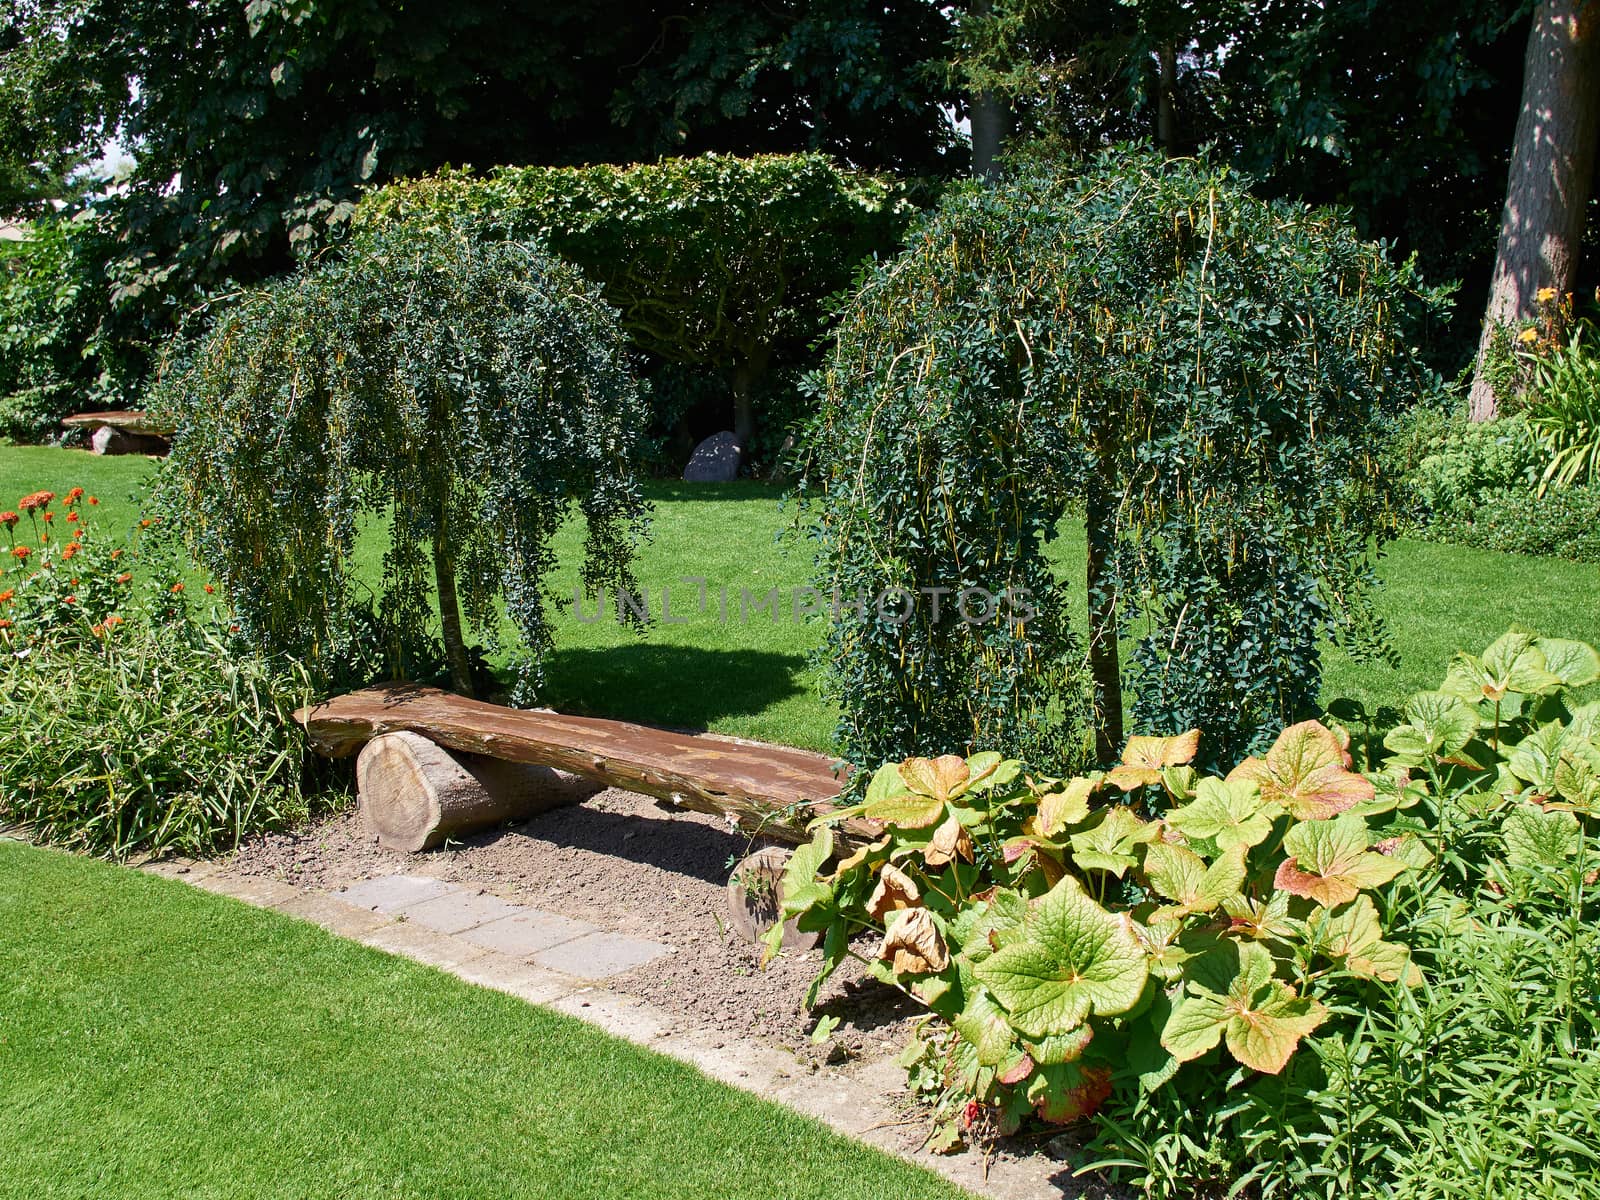 Beautiful creative wooden bench in a lush green blooming garden